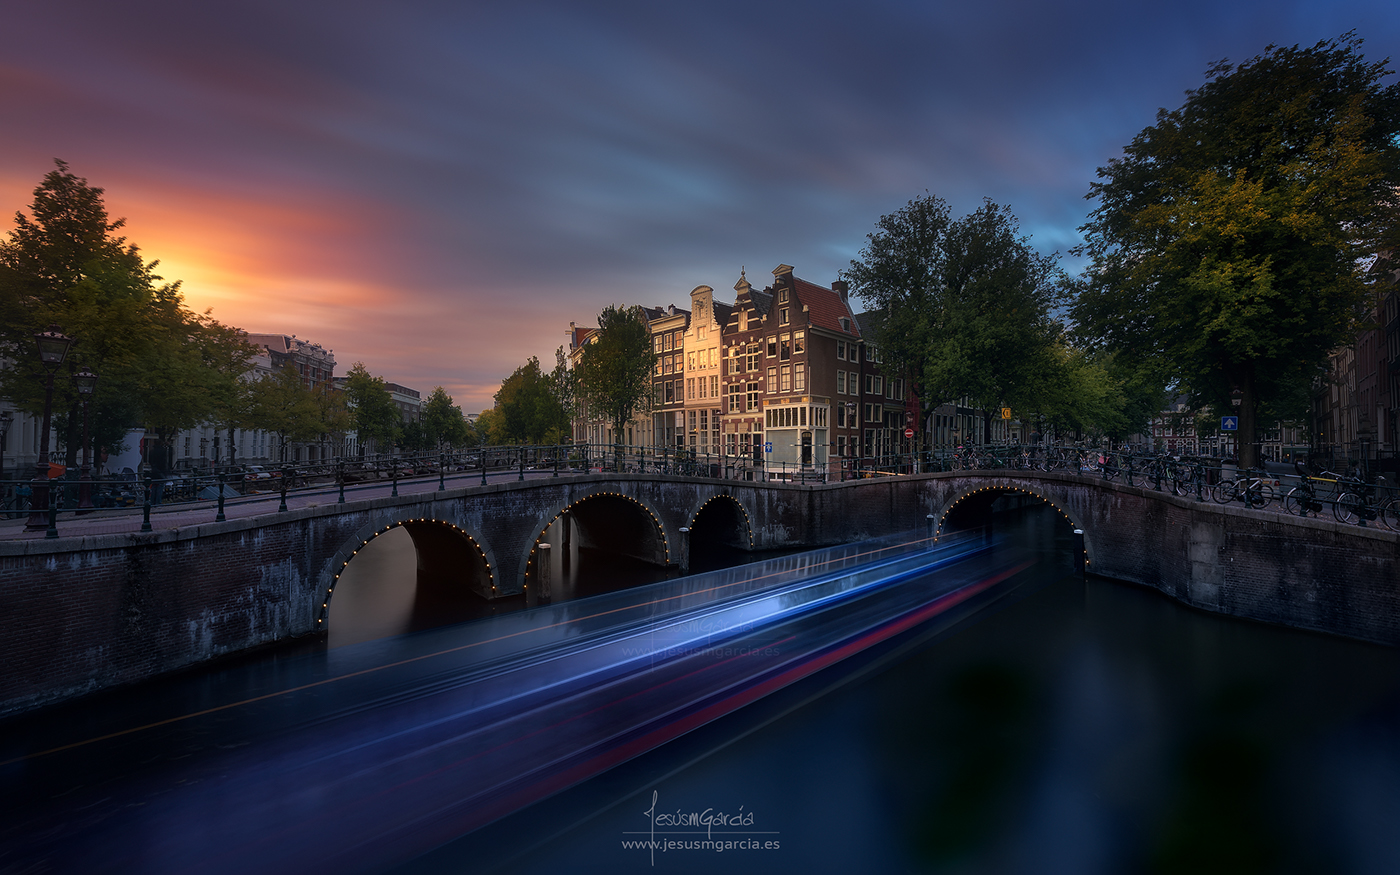 jesusmgarcia top ten photographer Landscape nightscene cityscapes Photography  travel photography amsterdam Netherlands